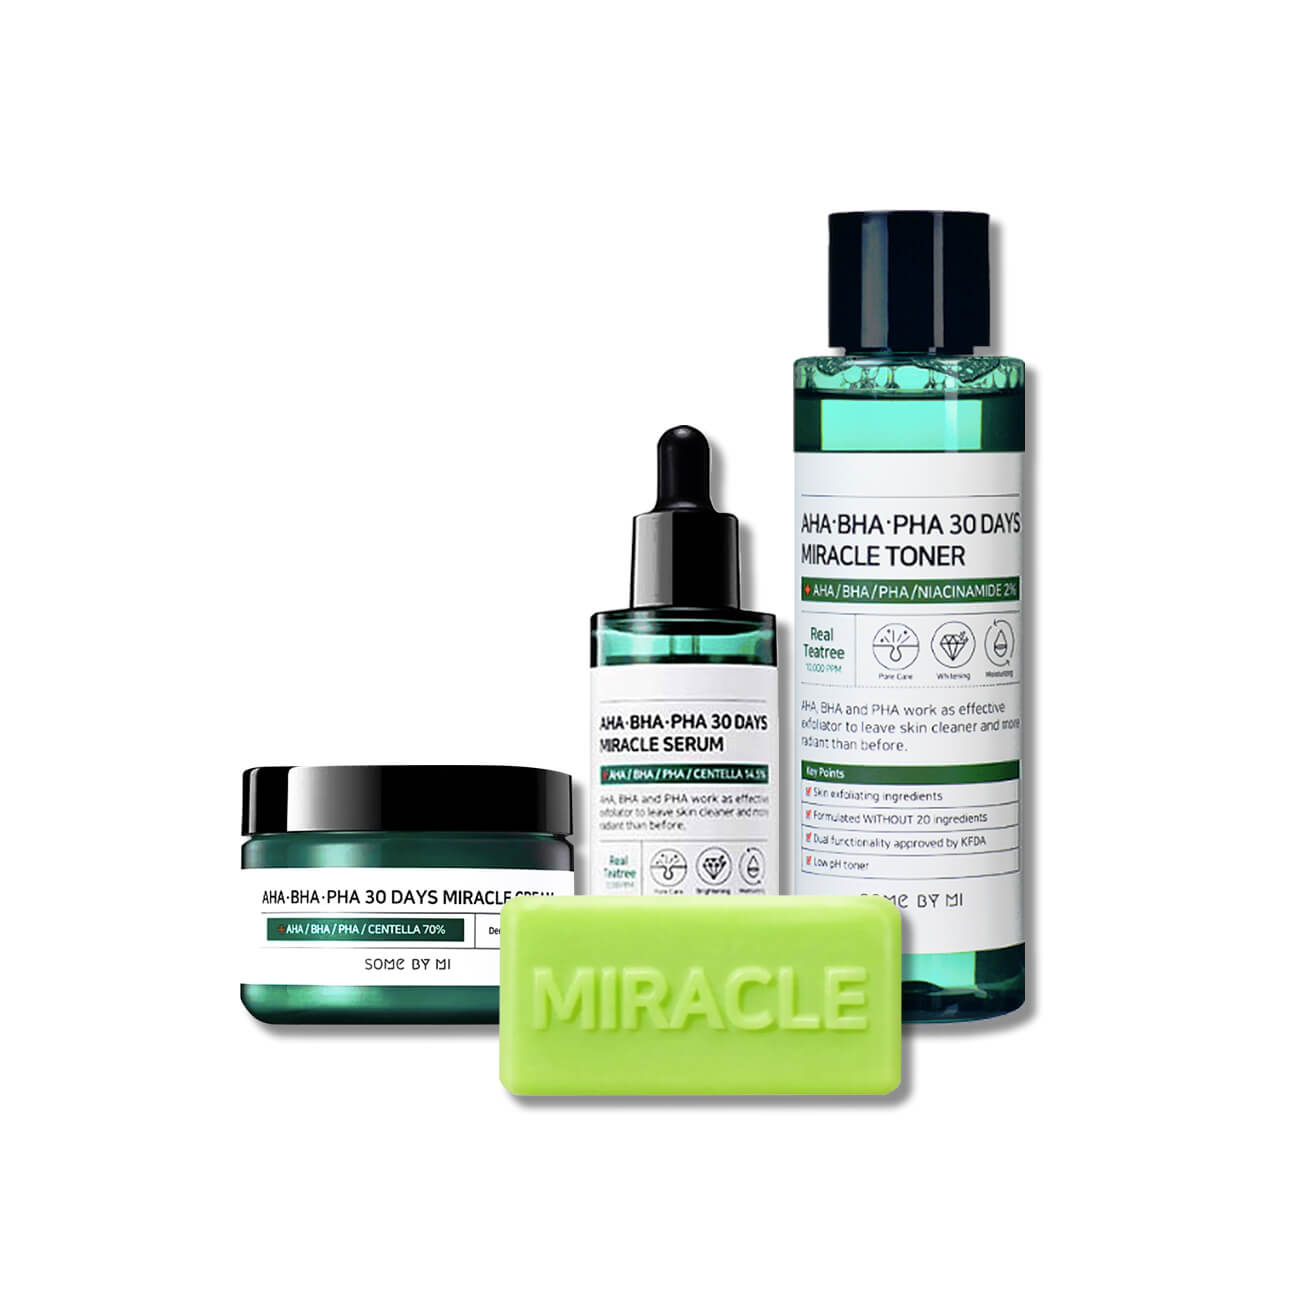 Some By Mi AHA BHA PHA 30 Days Miracle Full Set best Korean skin care toner cleanser soap serum moisturizer for oily acne prone skin K Beauty World